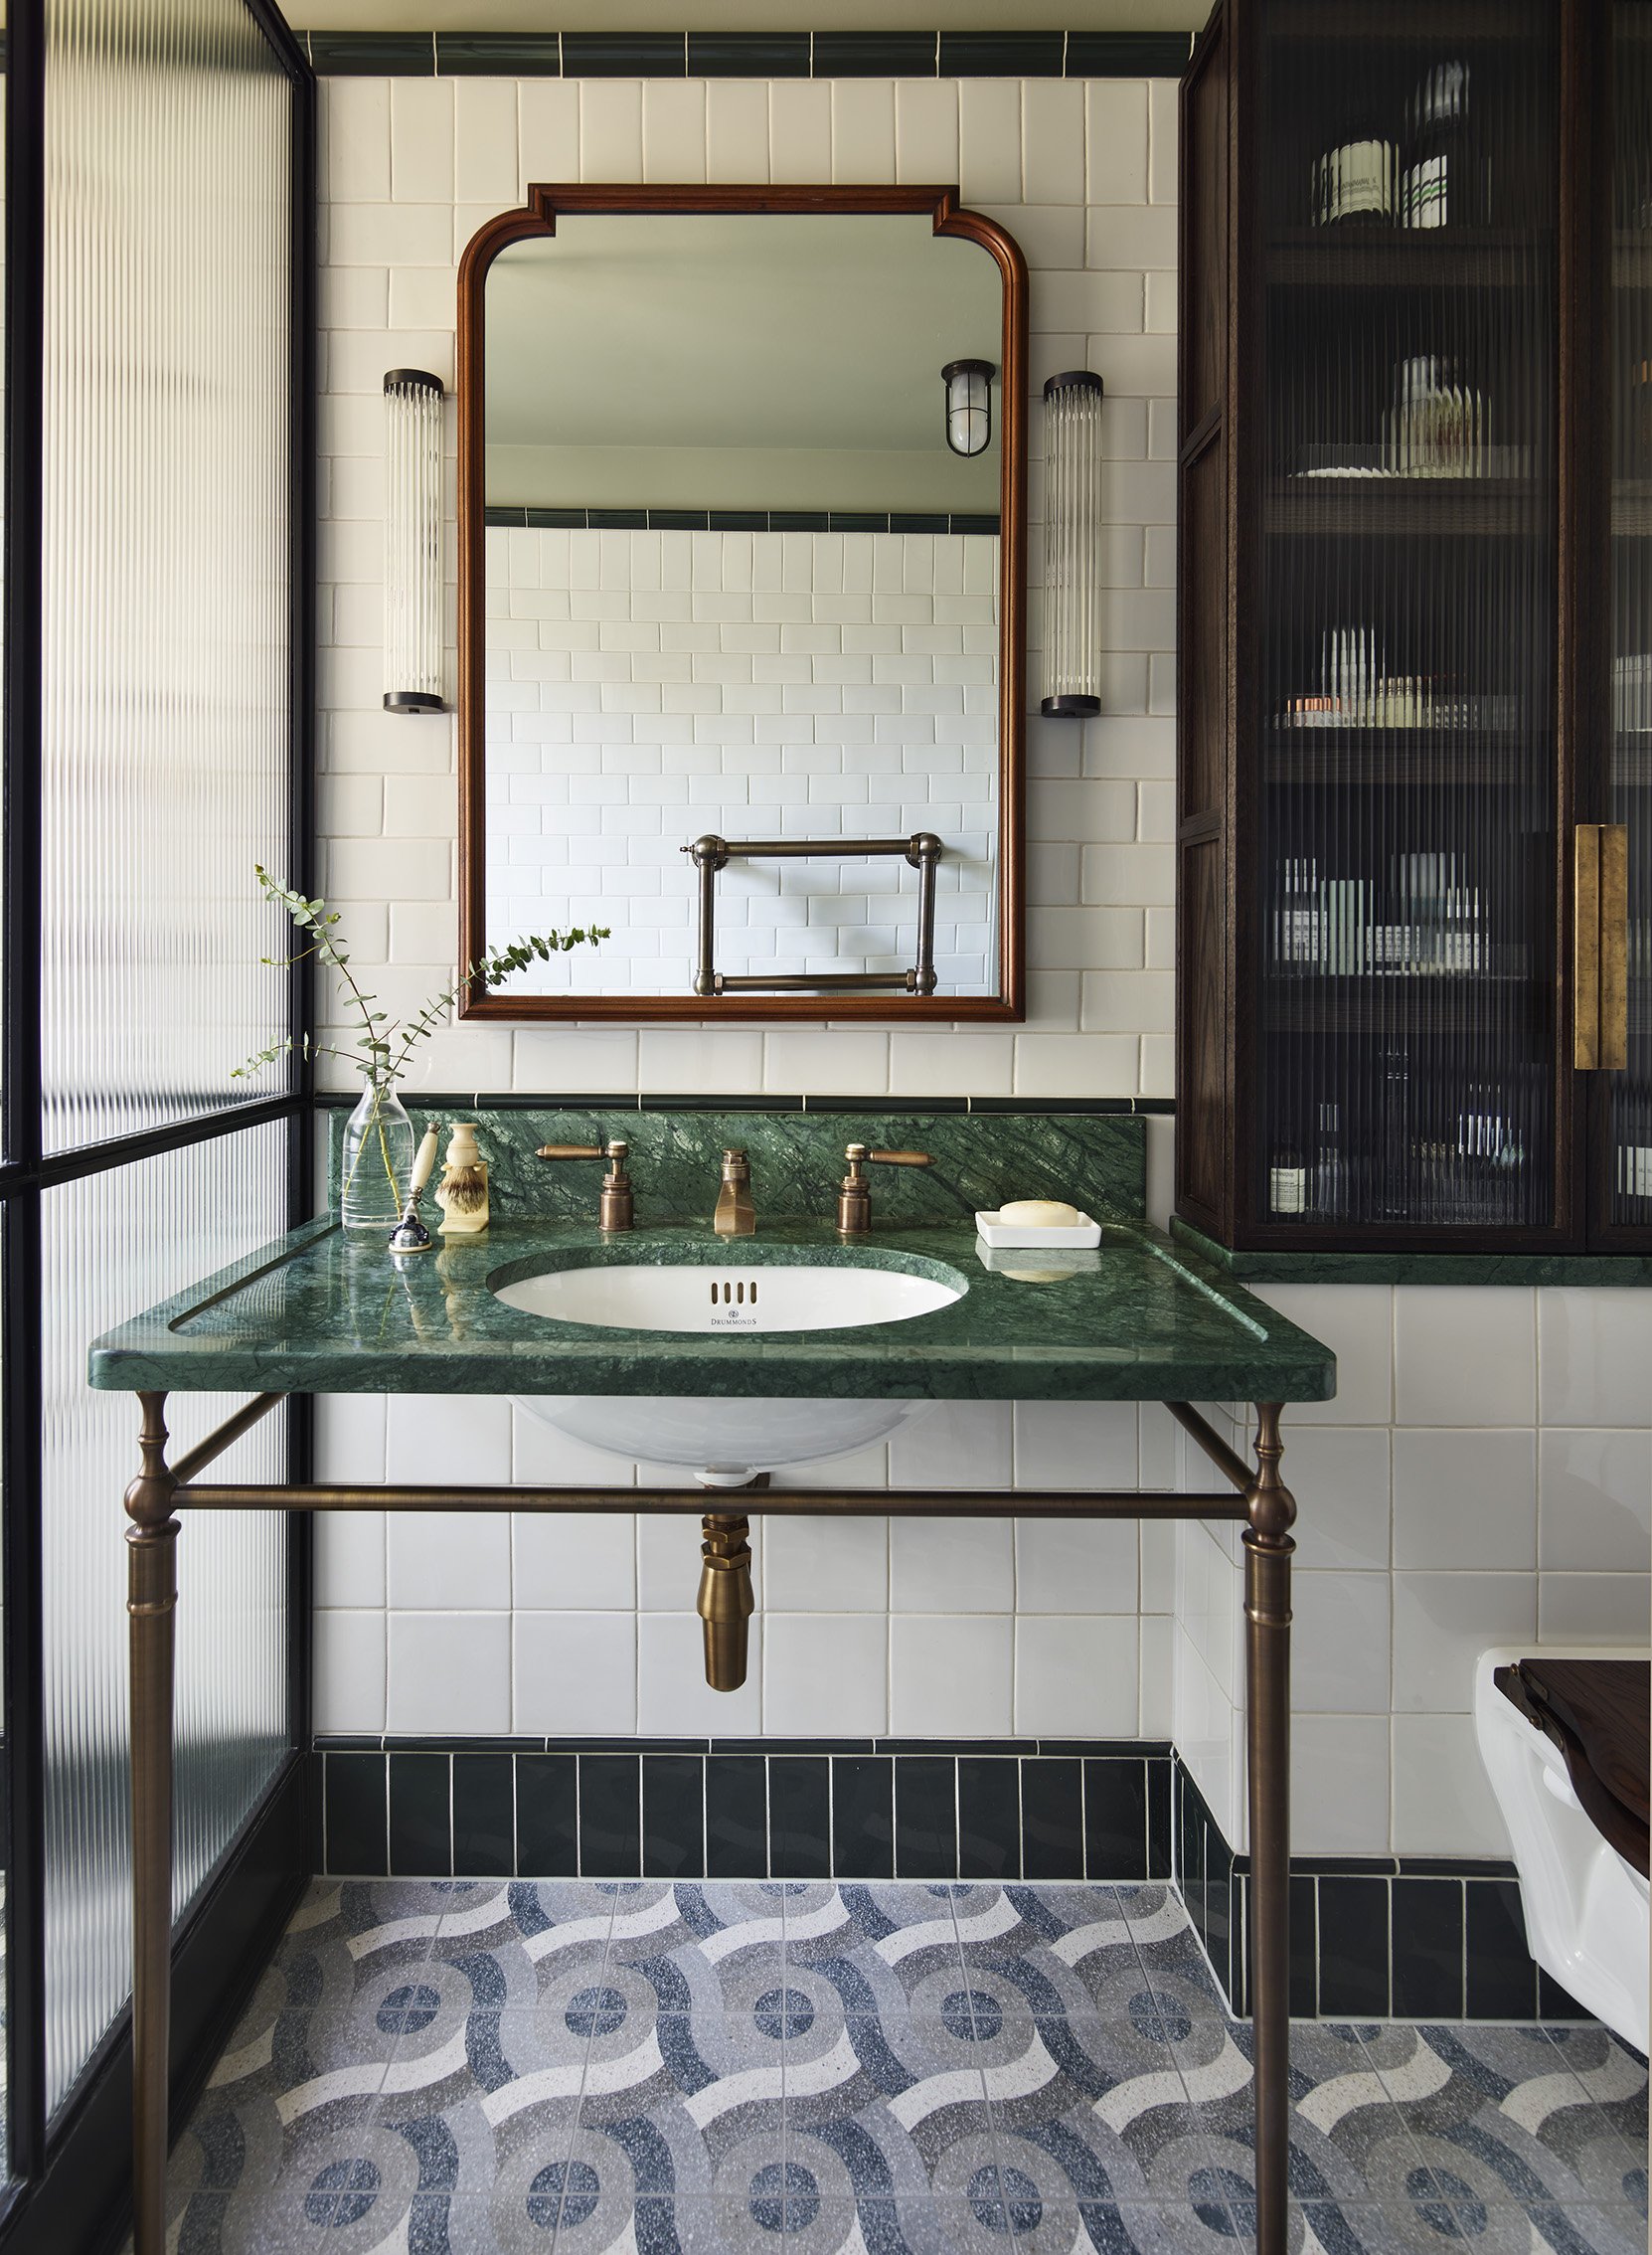 Bathroom interior design with timeless, retro, Art Deco style